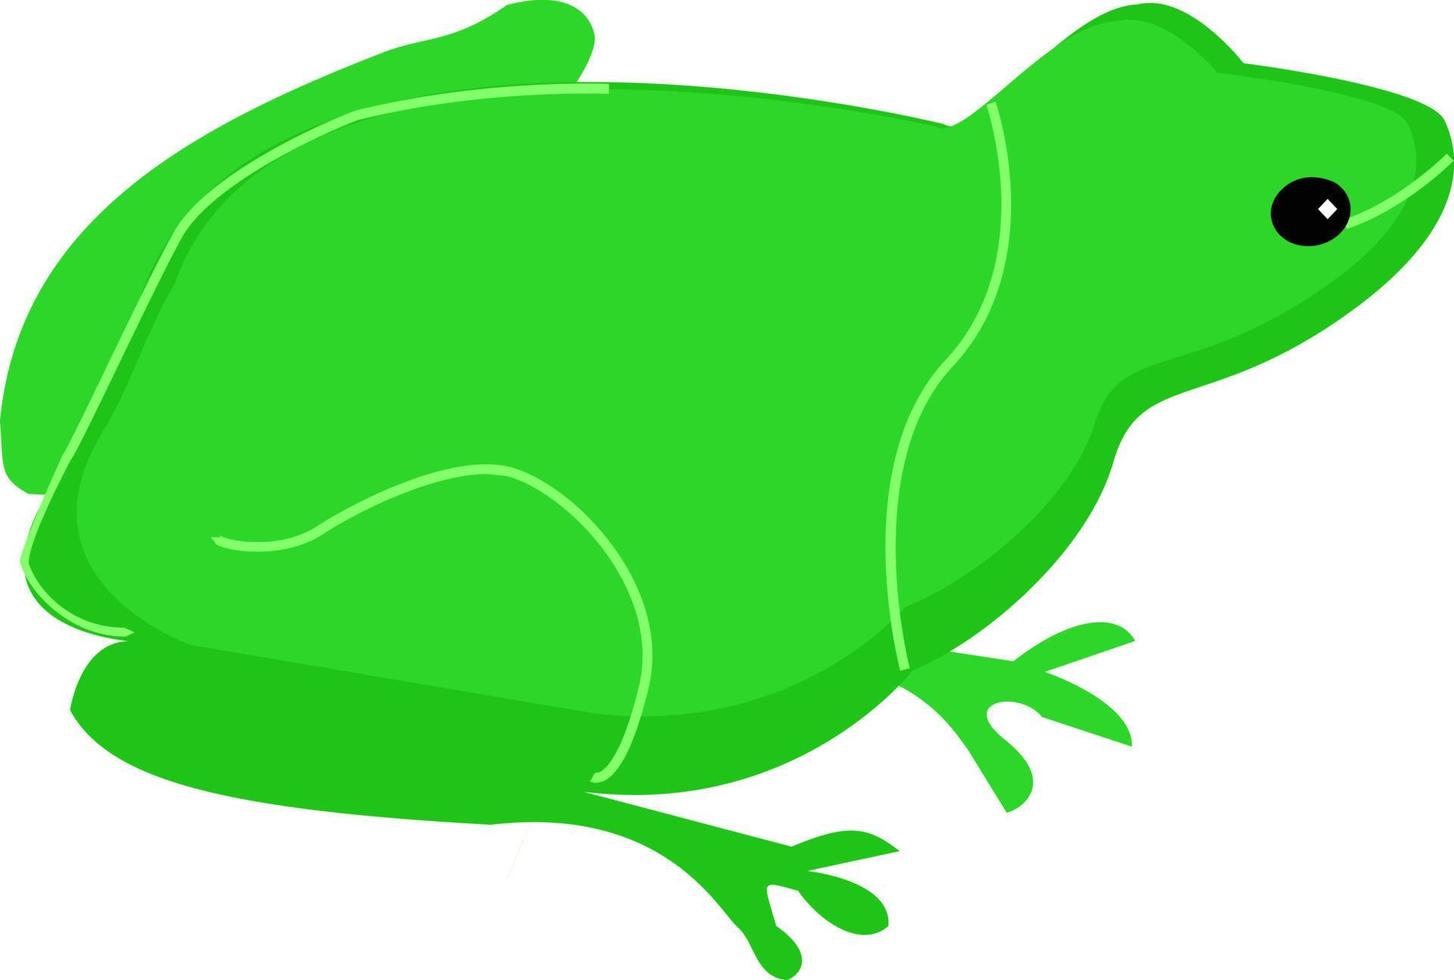 Green frog, illustration, vector on white background.